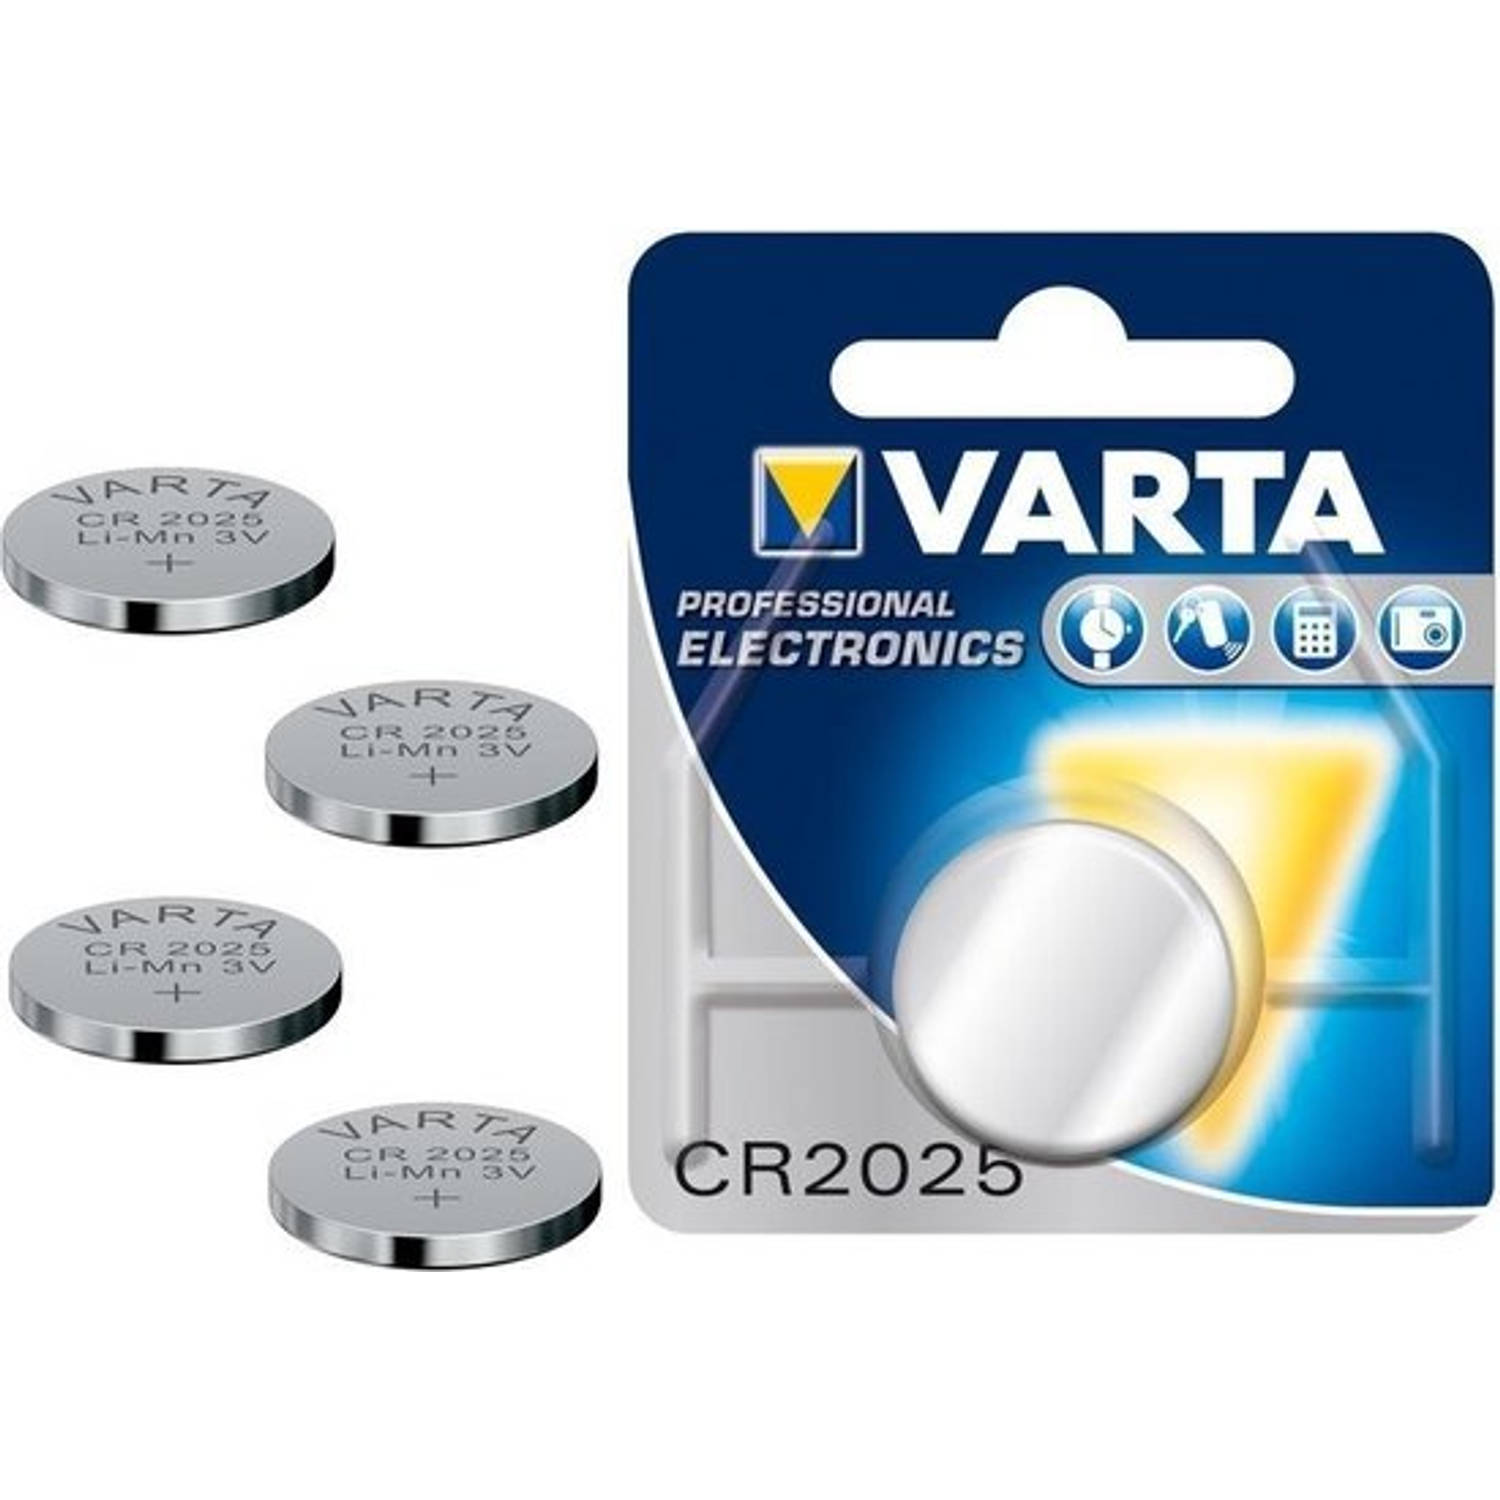 5 Stuks - Varta Professional Electronics CR2025 6025 3V 170mAh knoopcel batterij